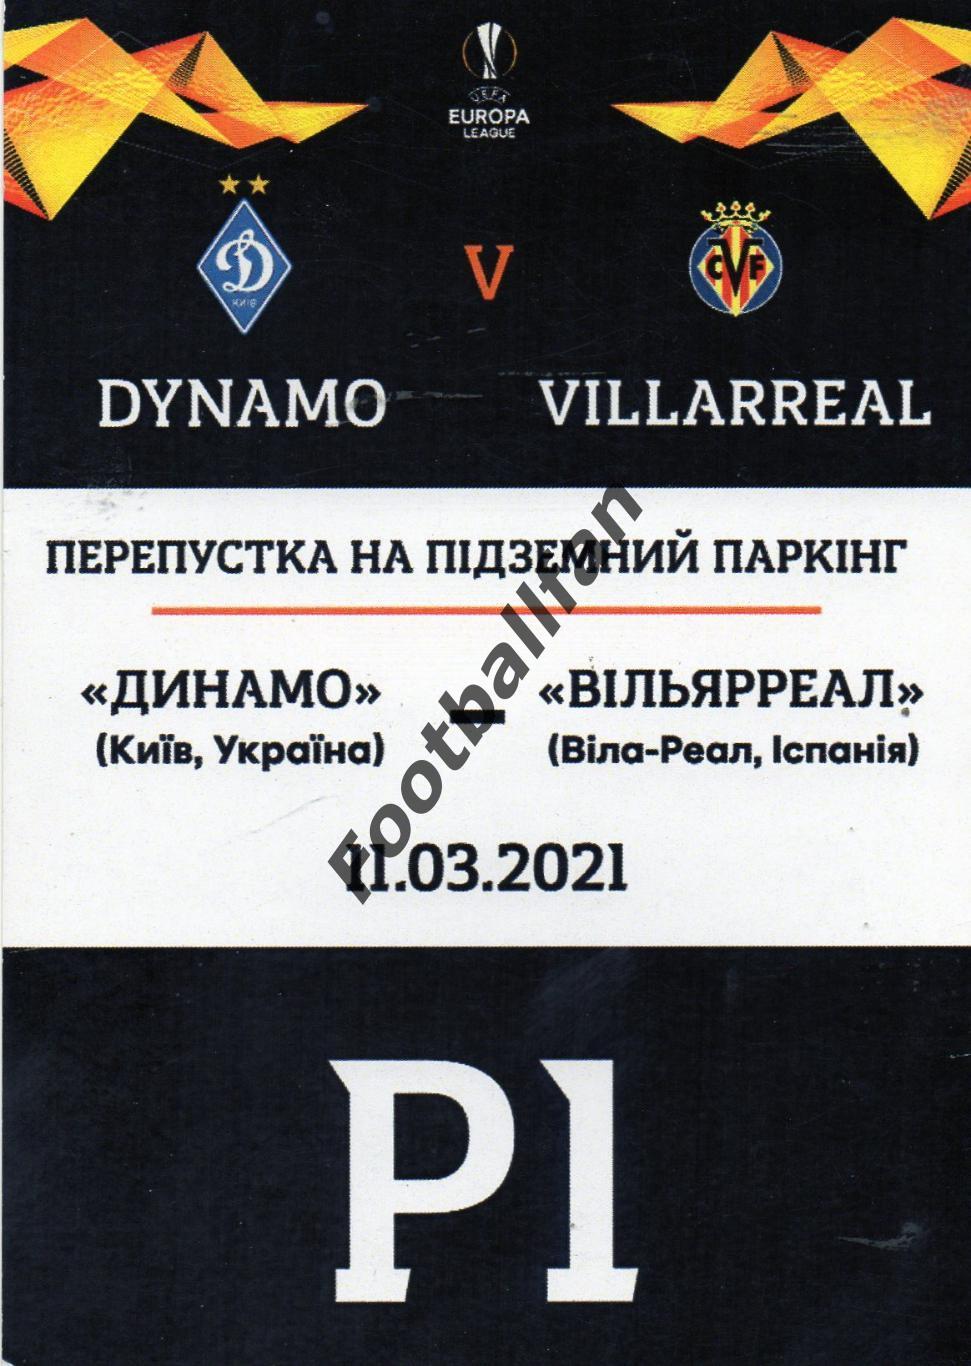 Динамо Киев , Украина - Вильярреал Испания 11.03.2021.